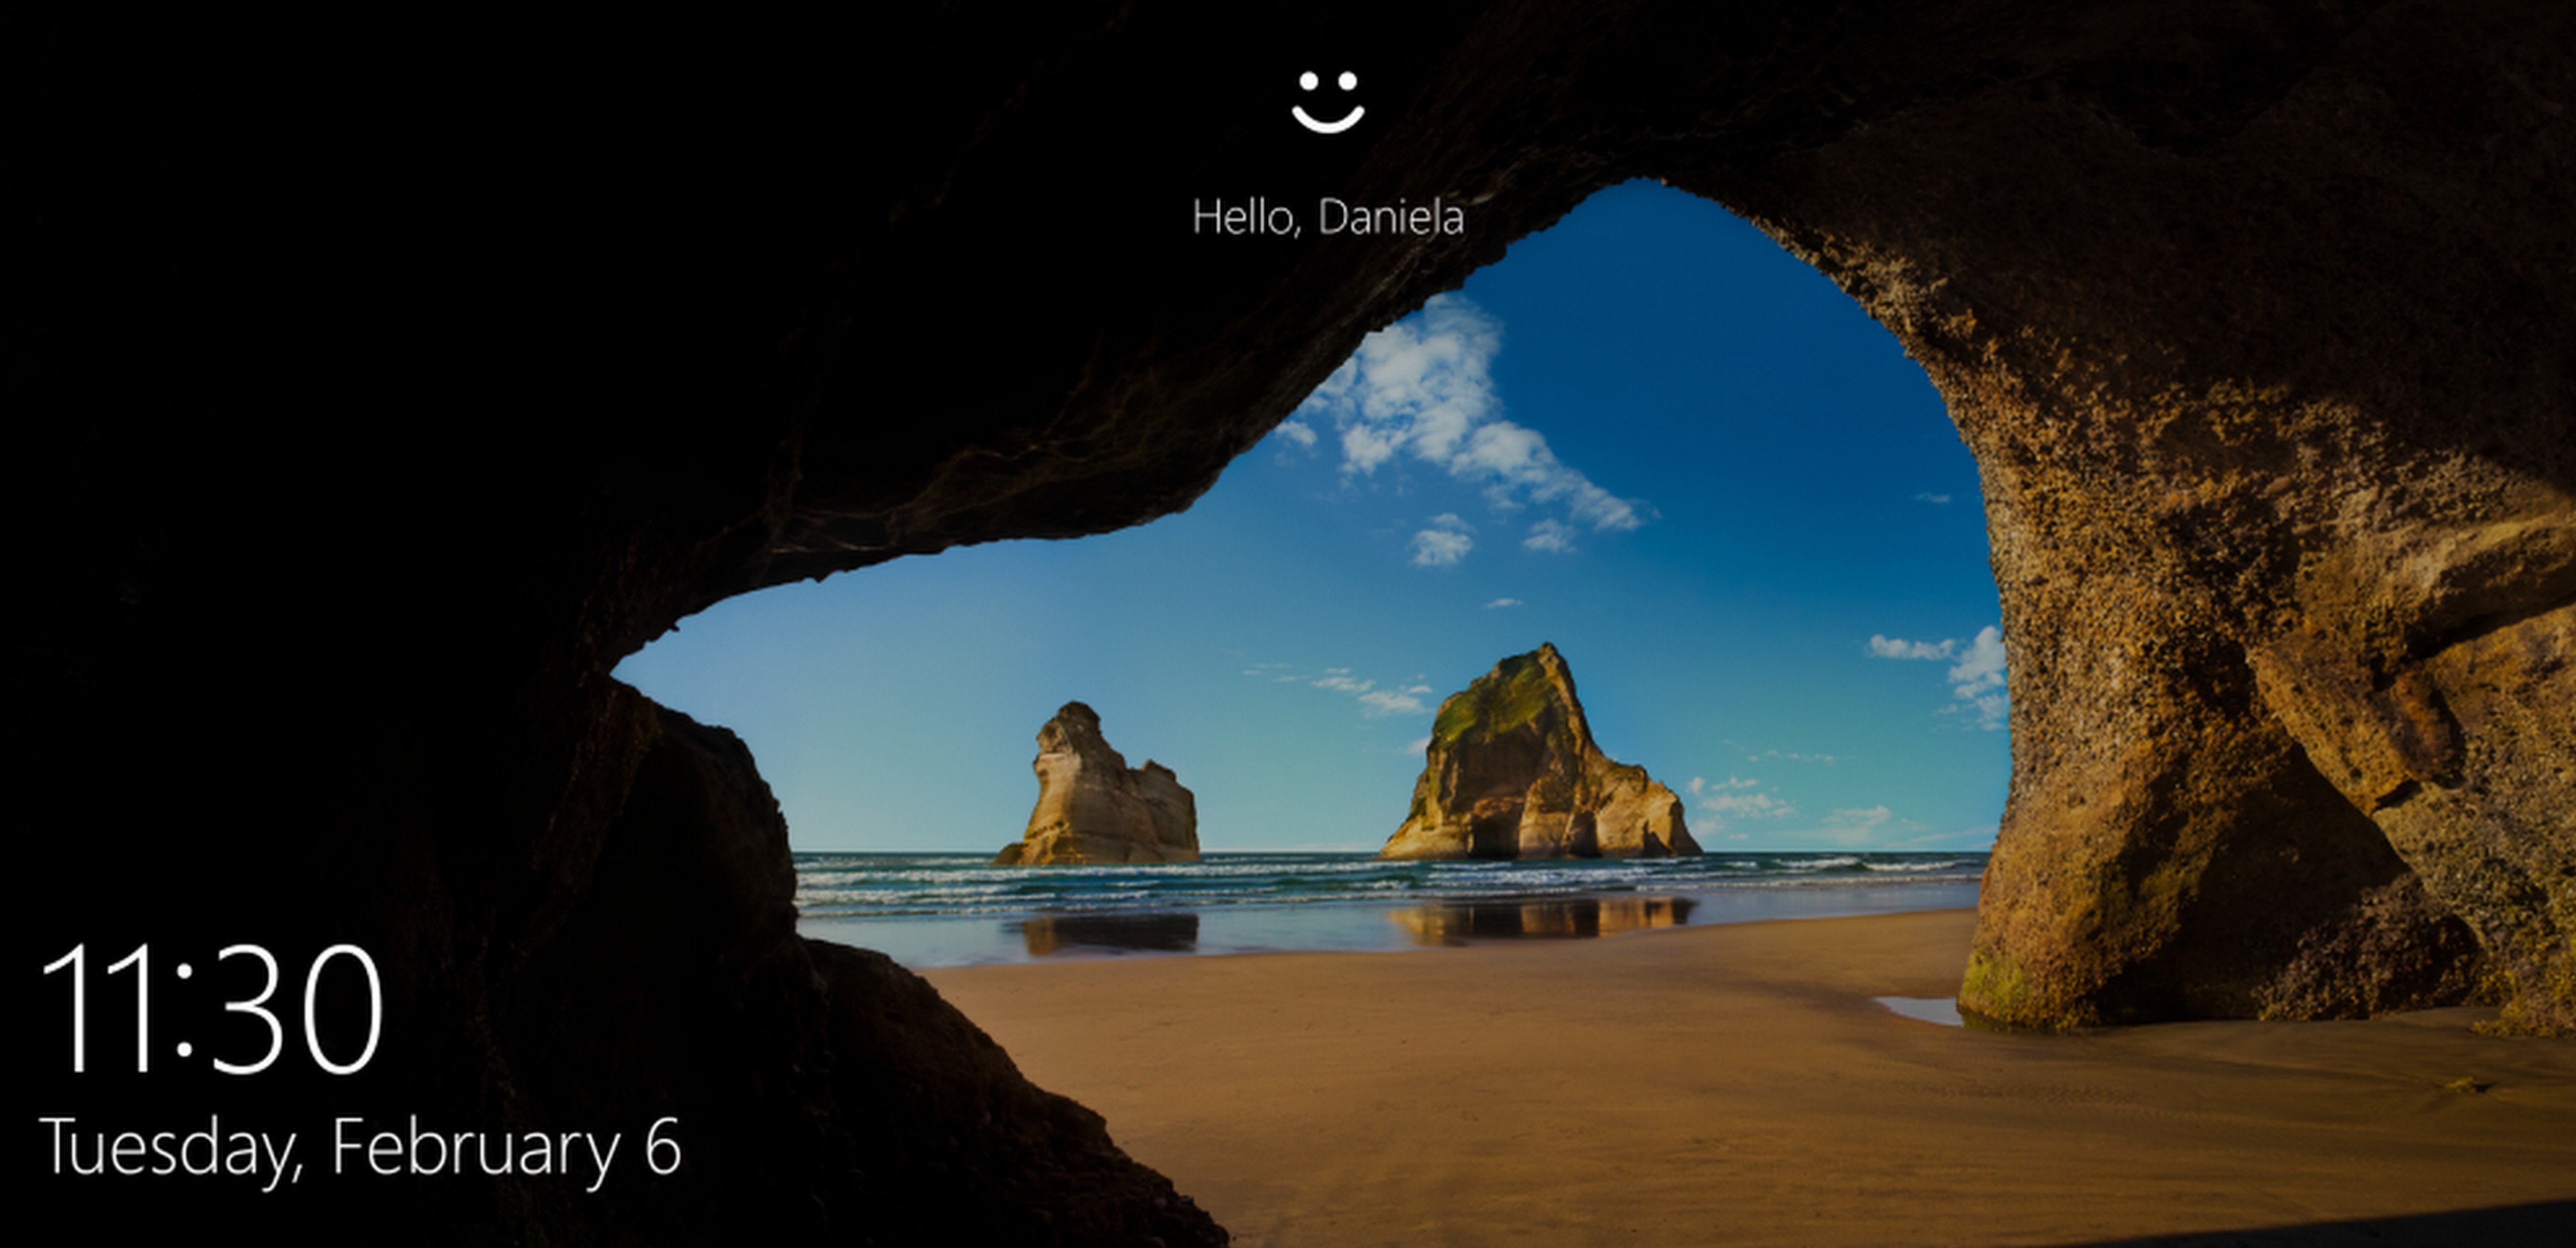 Windows 10 lockscreen with Windows Hello showing